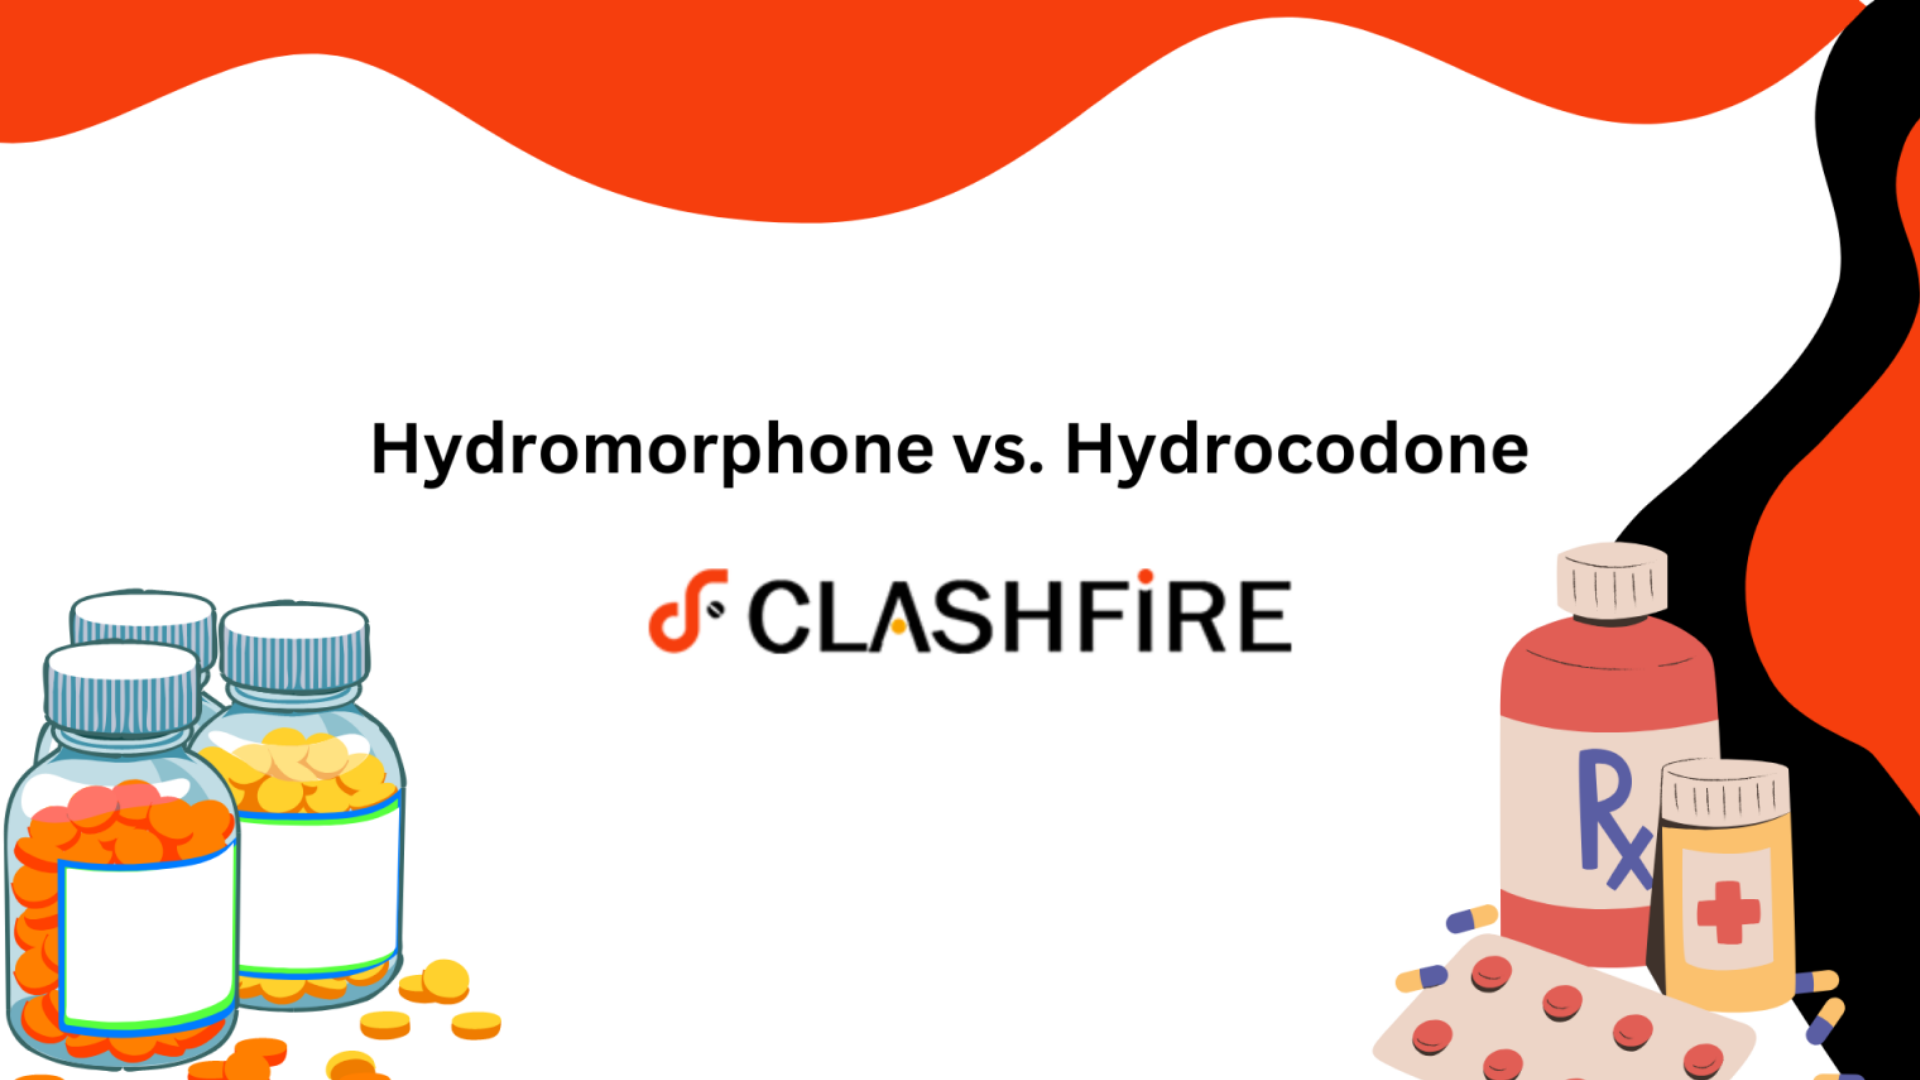 Hydromorphone vs. Hydrocodone